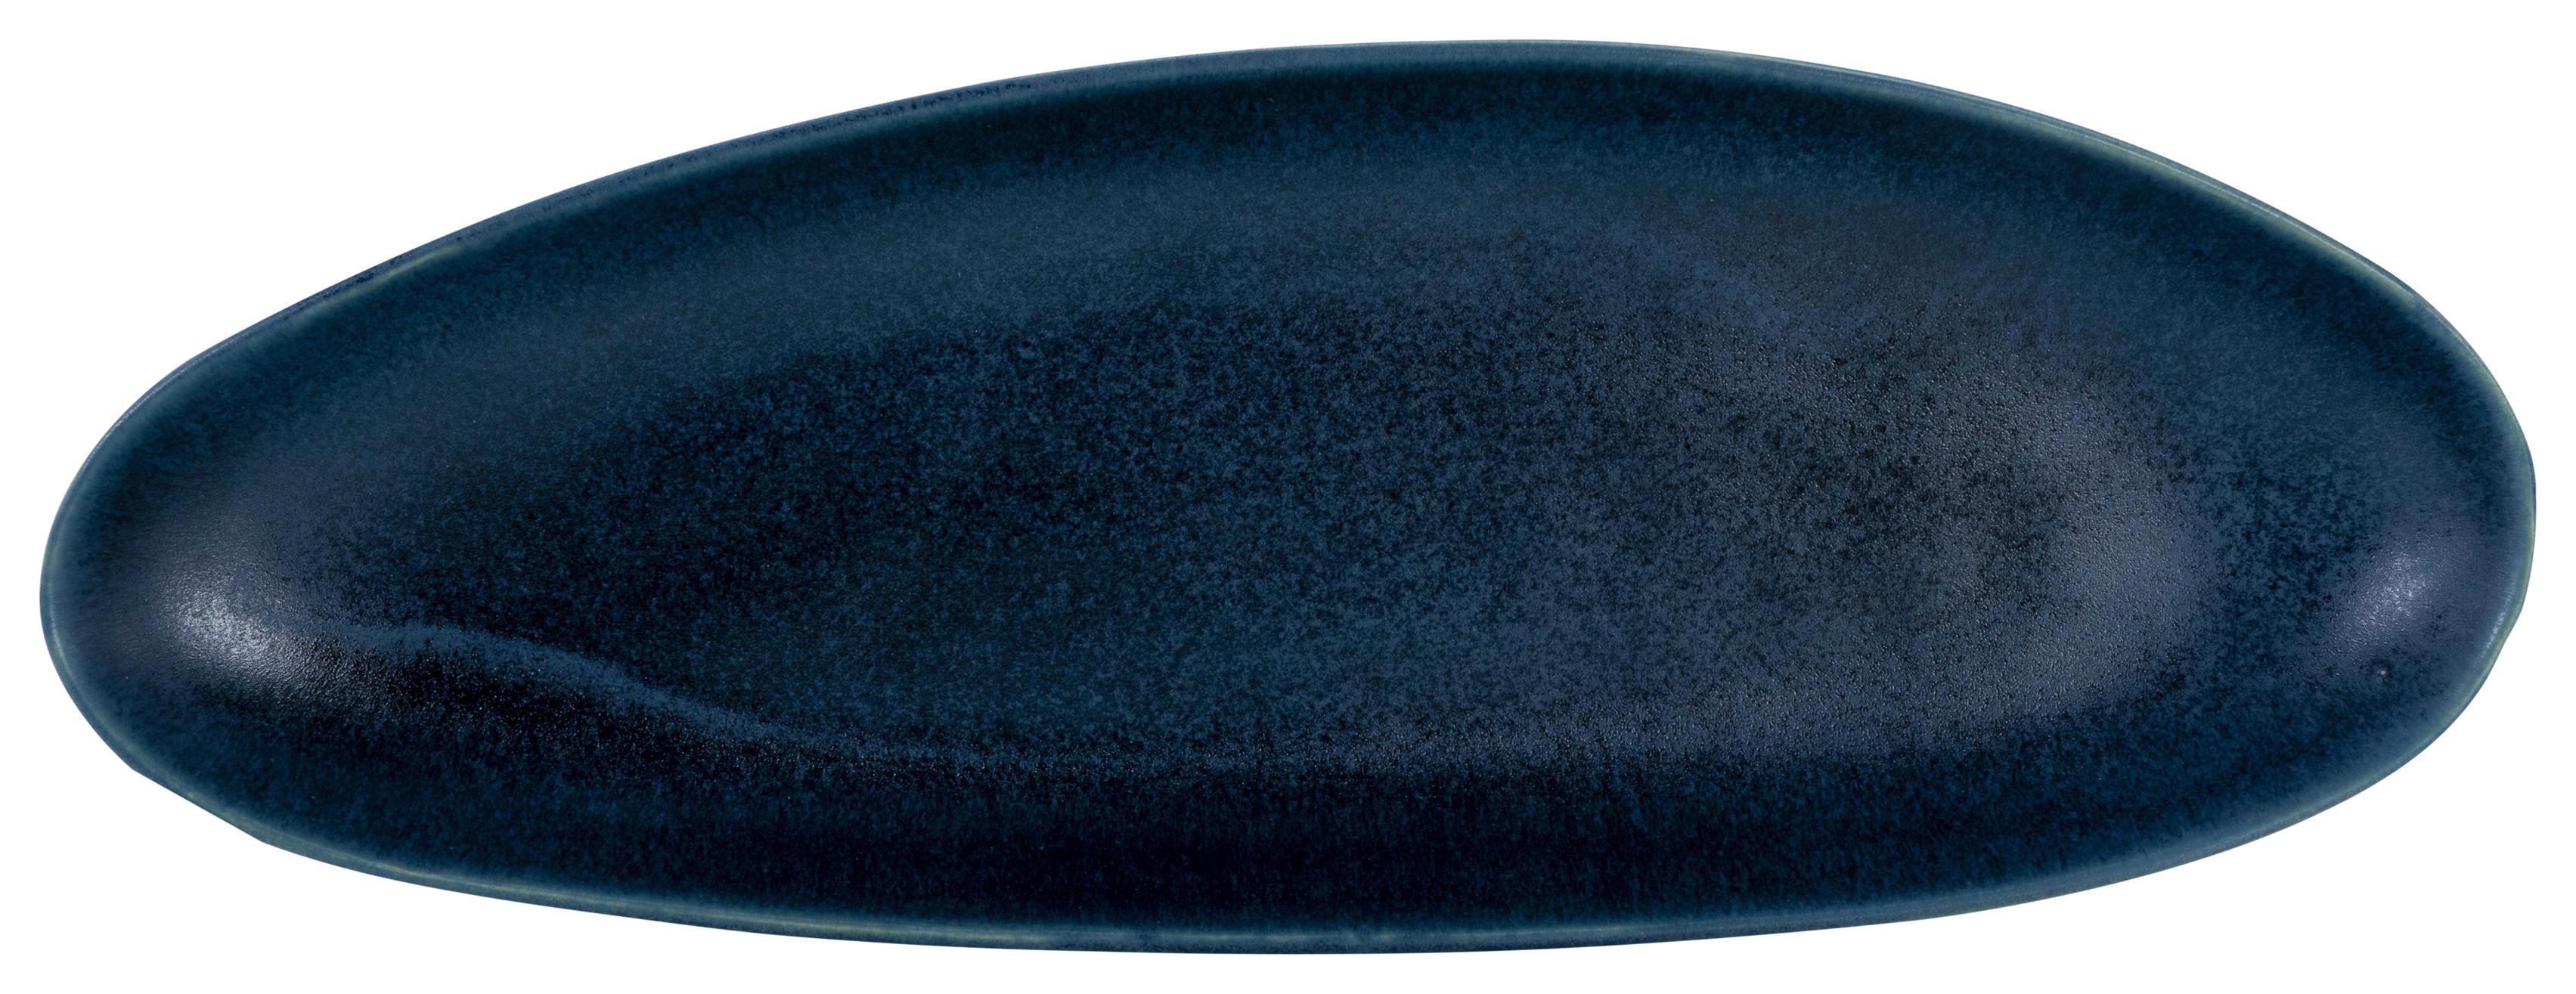 Servírovacia Tácka Gourmet-Xl, Ø: 39cm - modrá, Moderný, keramika (39/22/4cm) - Premium Living